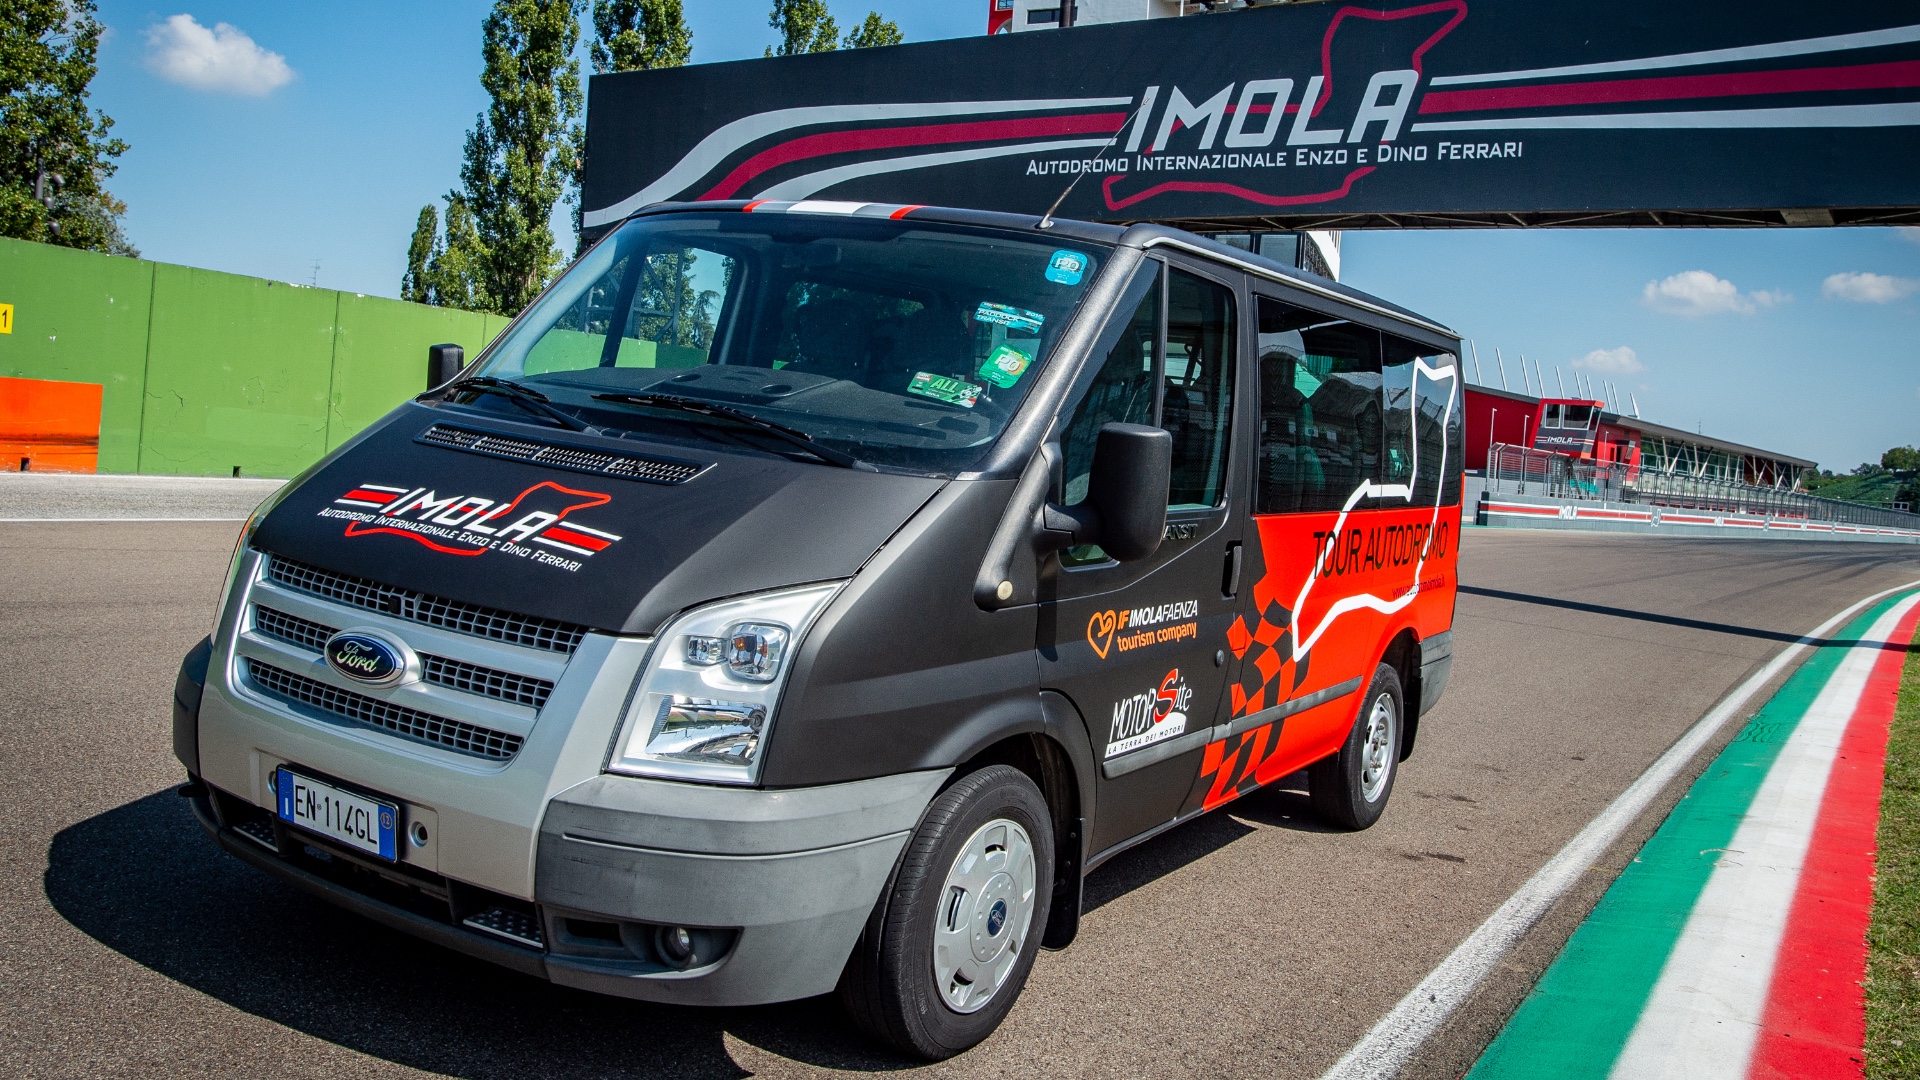 Imola Circuit guided tour